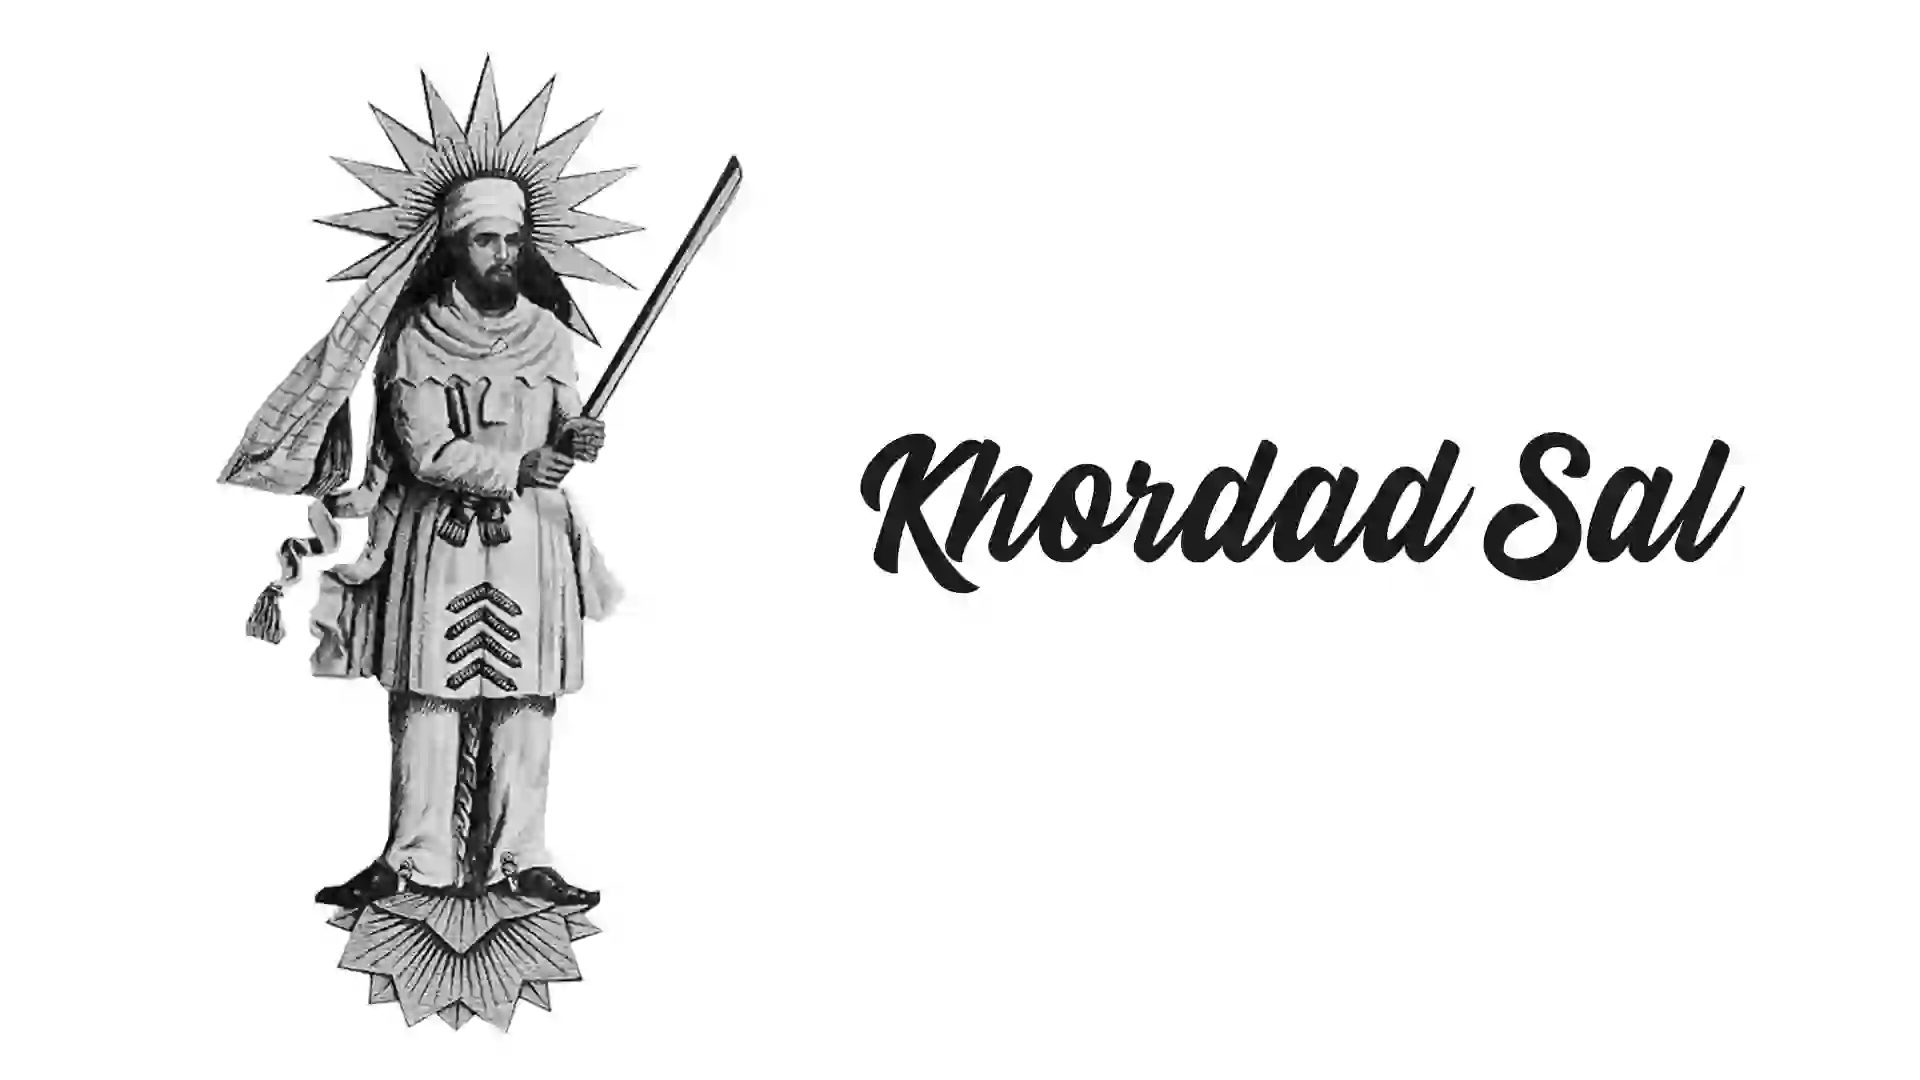 Khordad Sal This Post Design By The Revolution Deshbhakt Hindustani